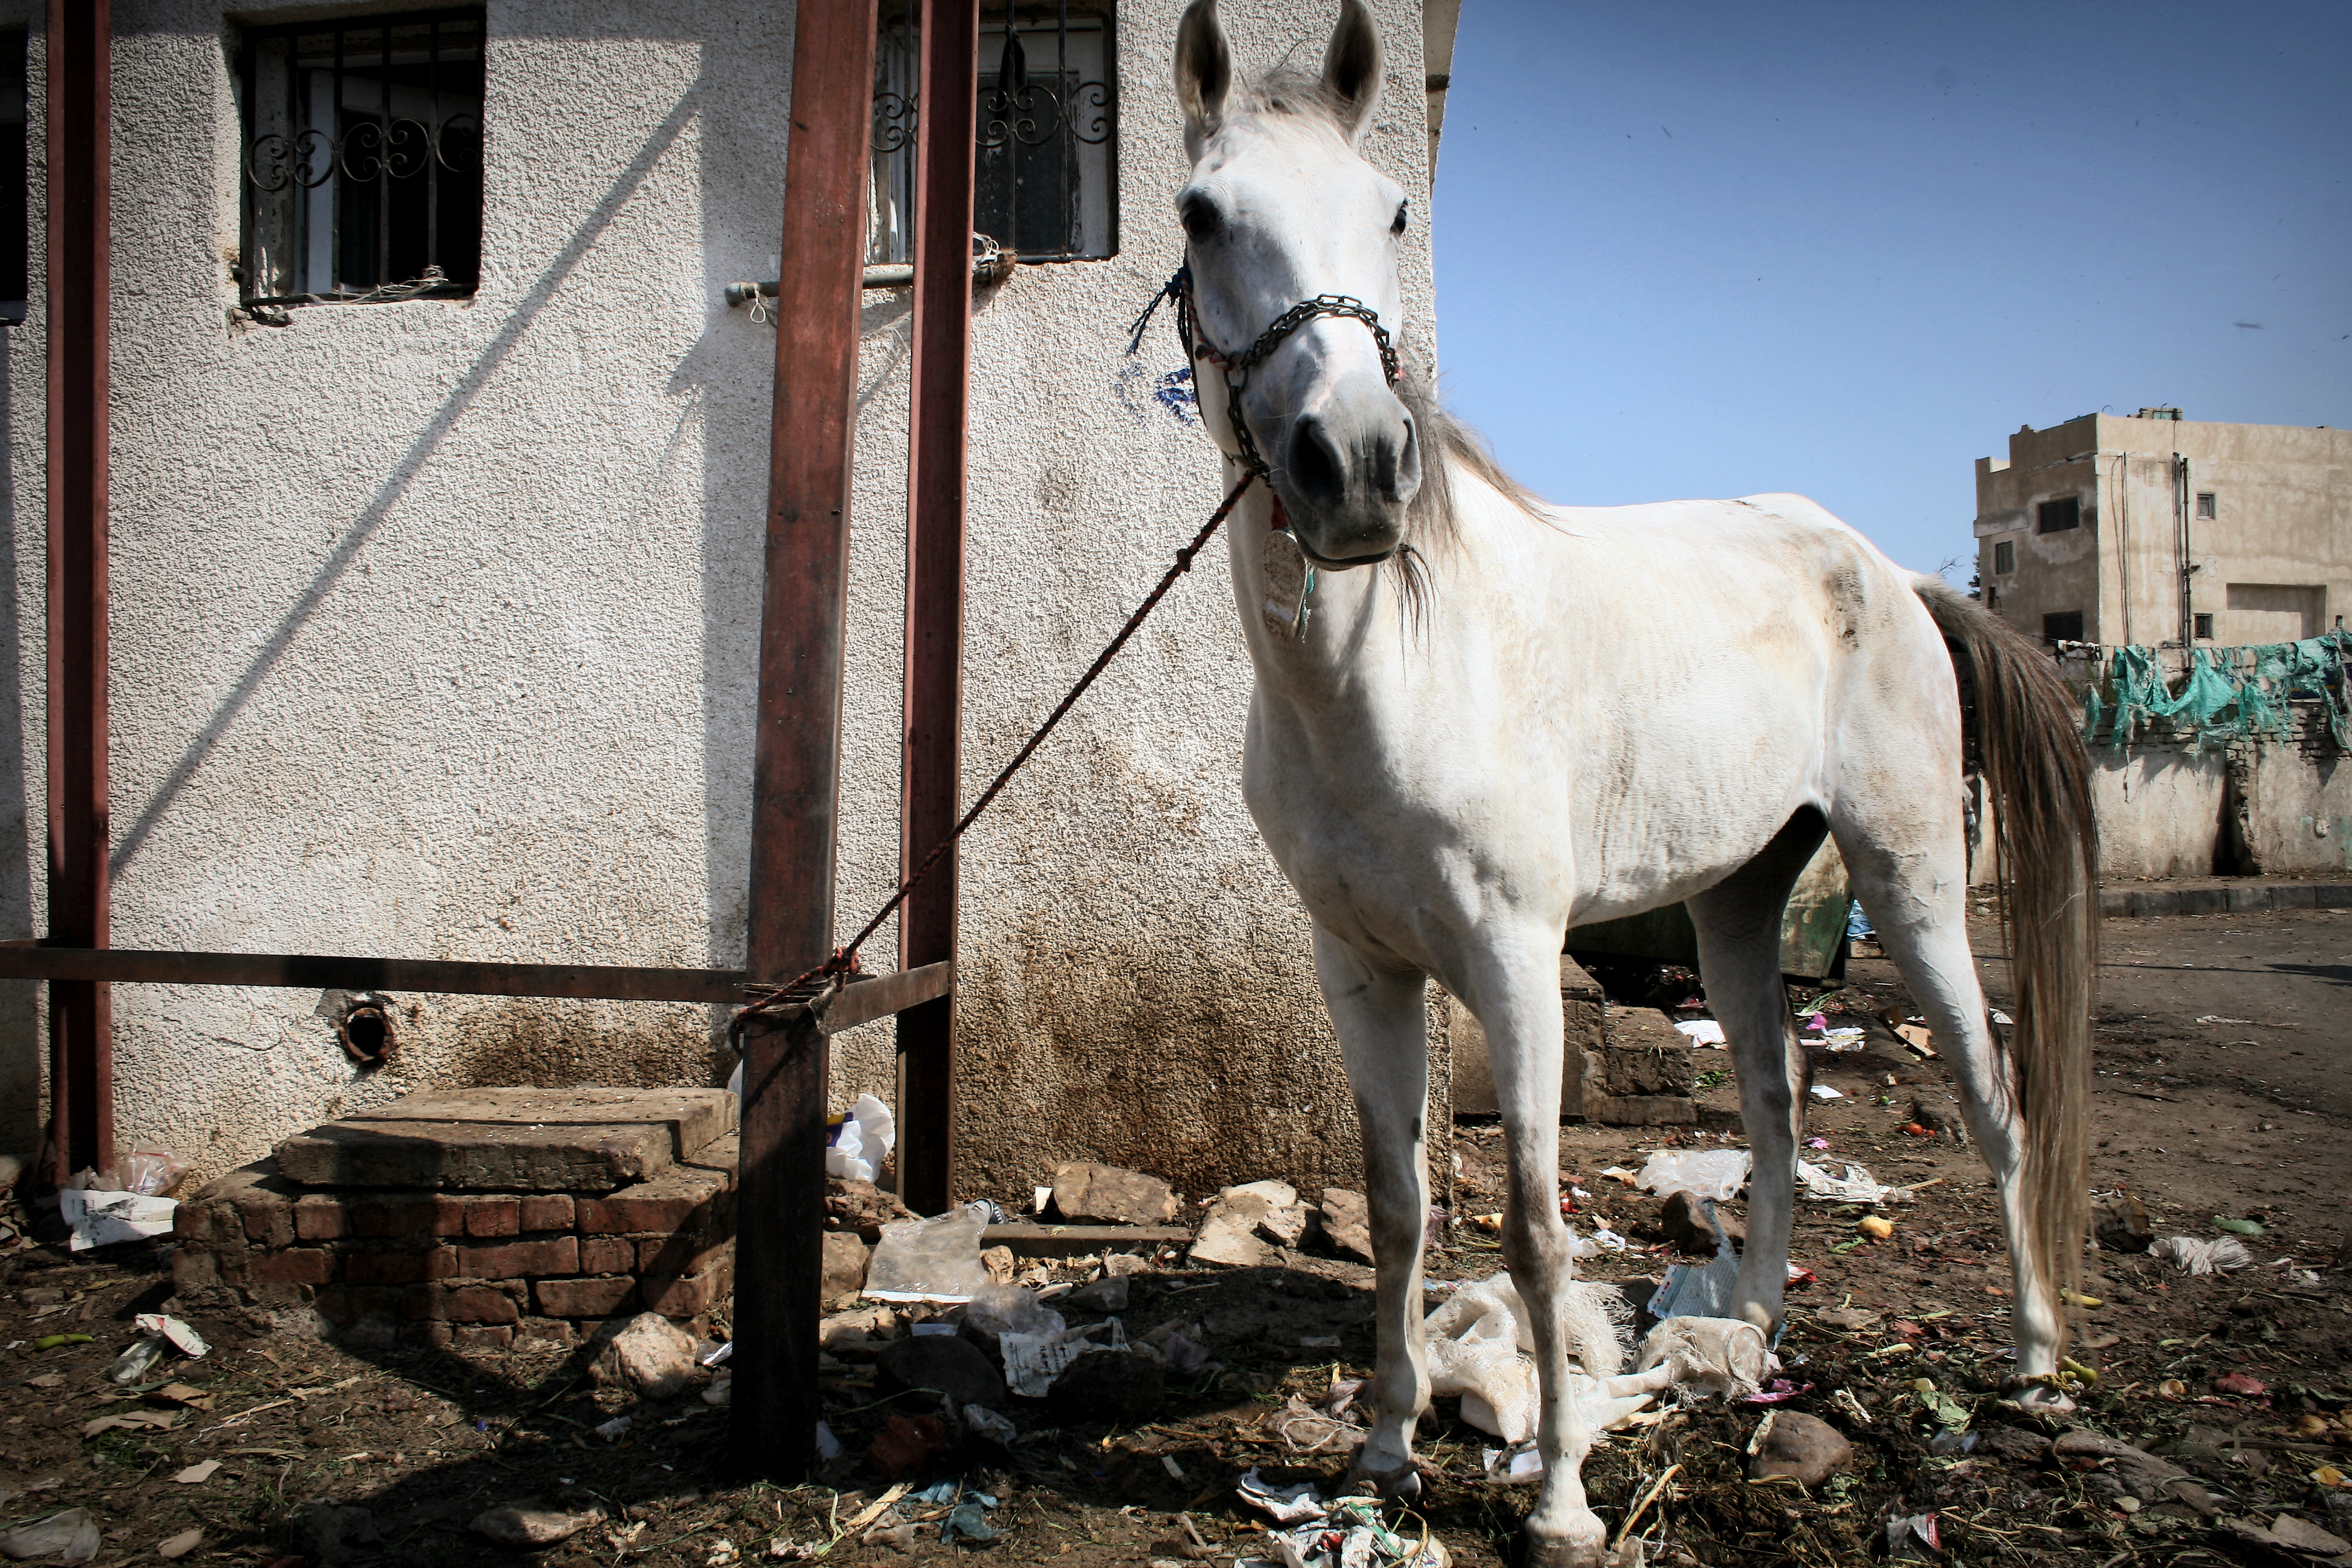 Horse kept by trash photo